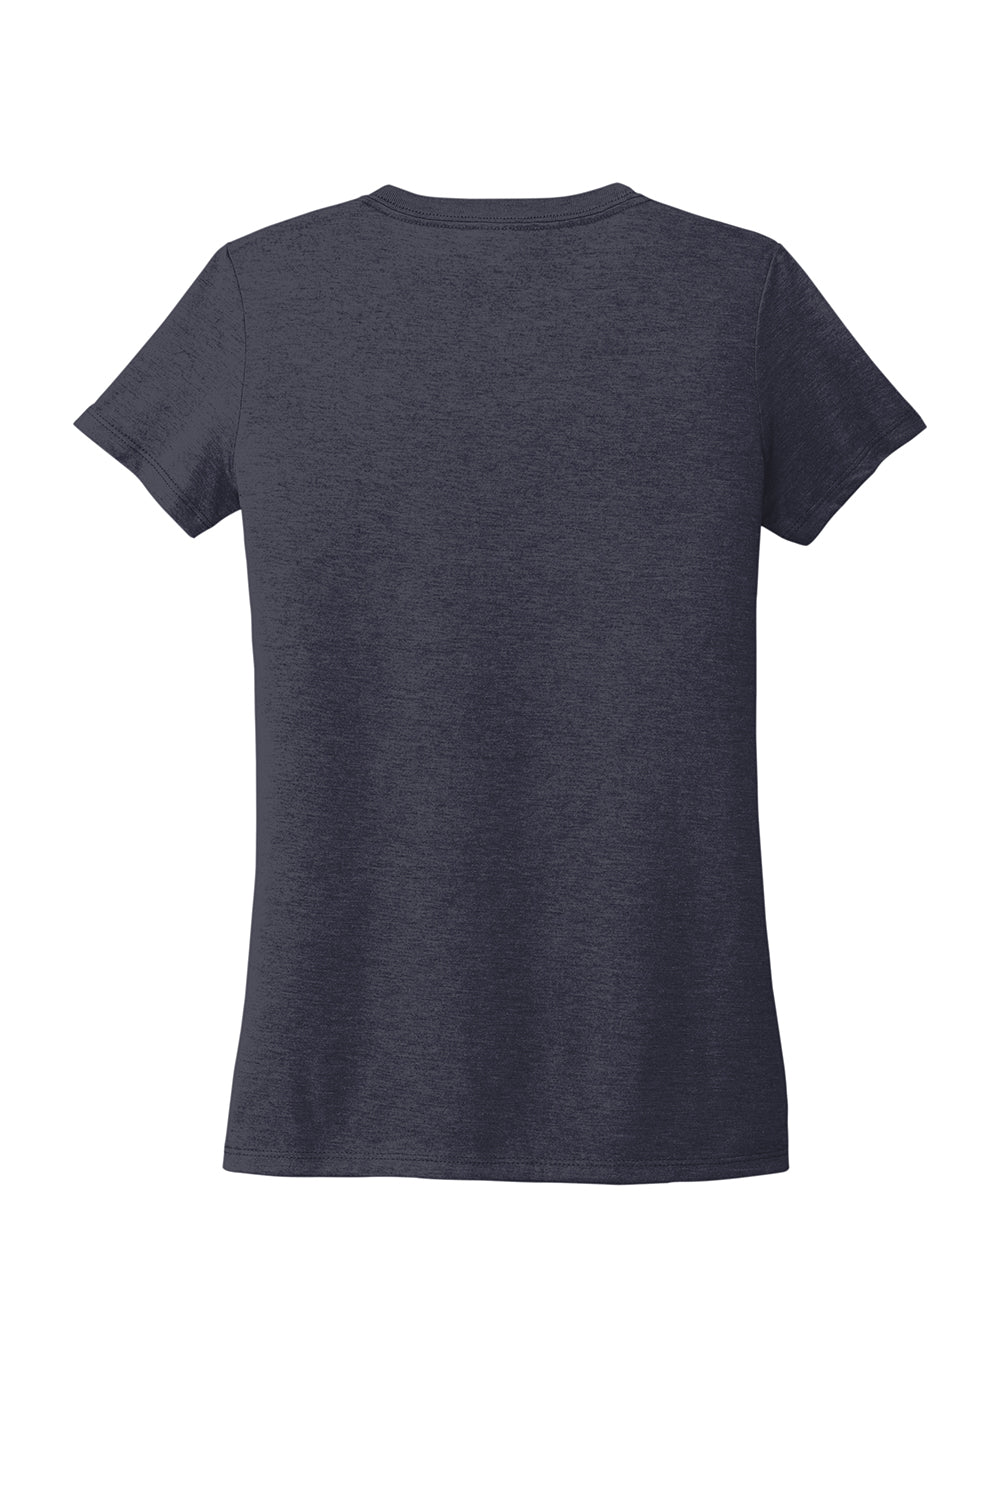 Allmade AL2018 Womens Short Sleeve V-Neck T-Shirt Rebel Blue Flat Back